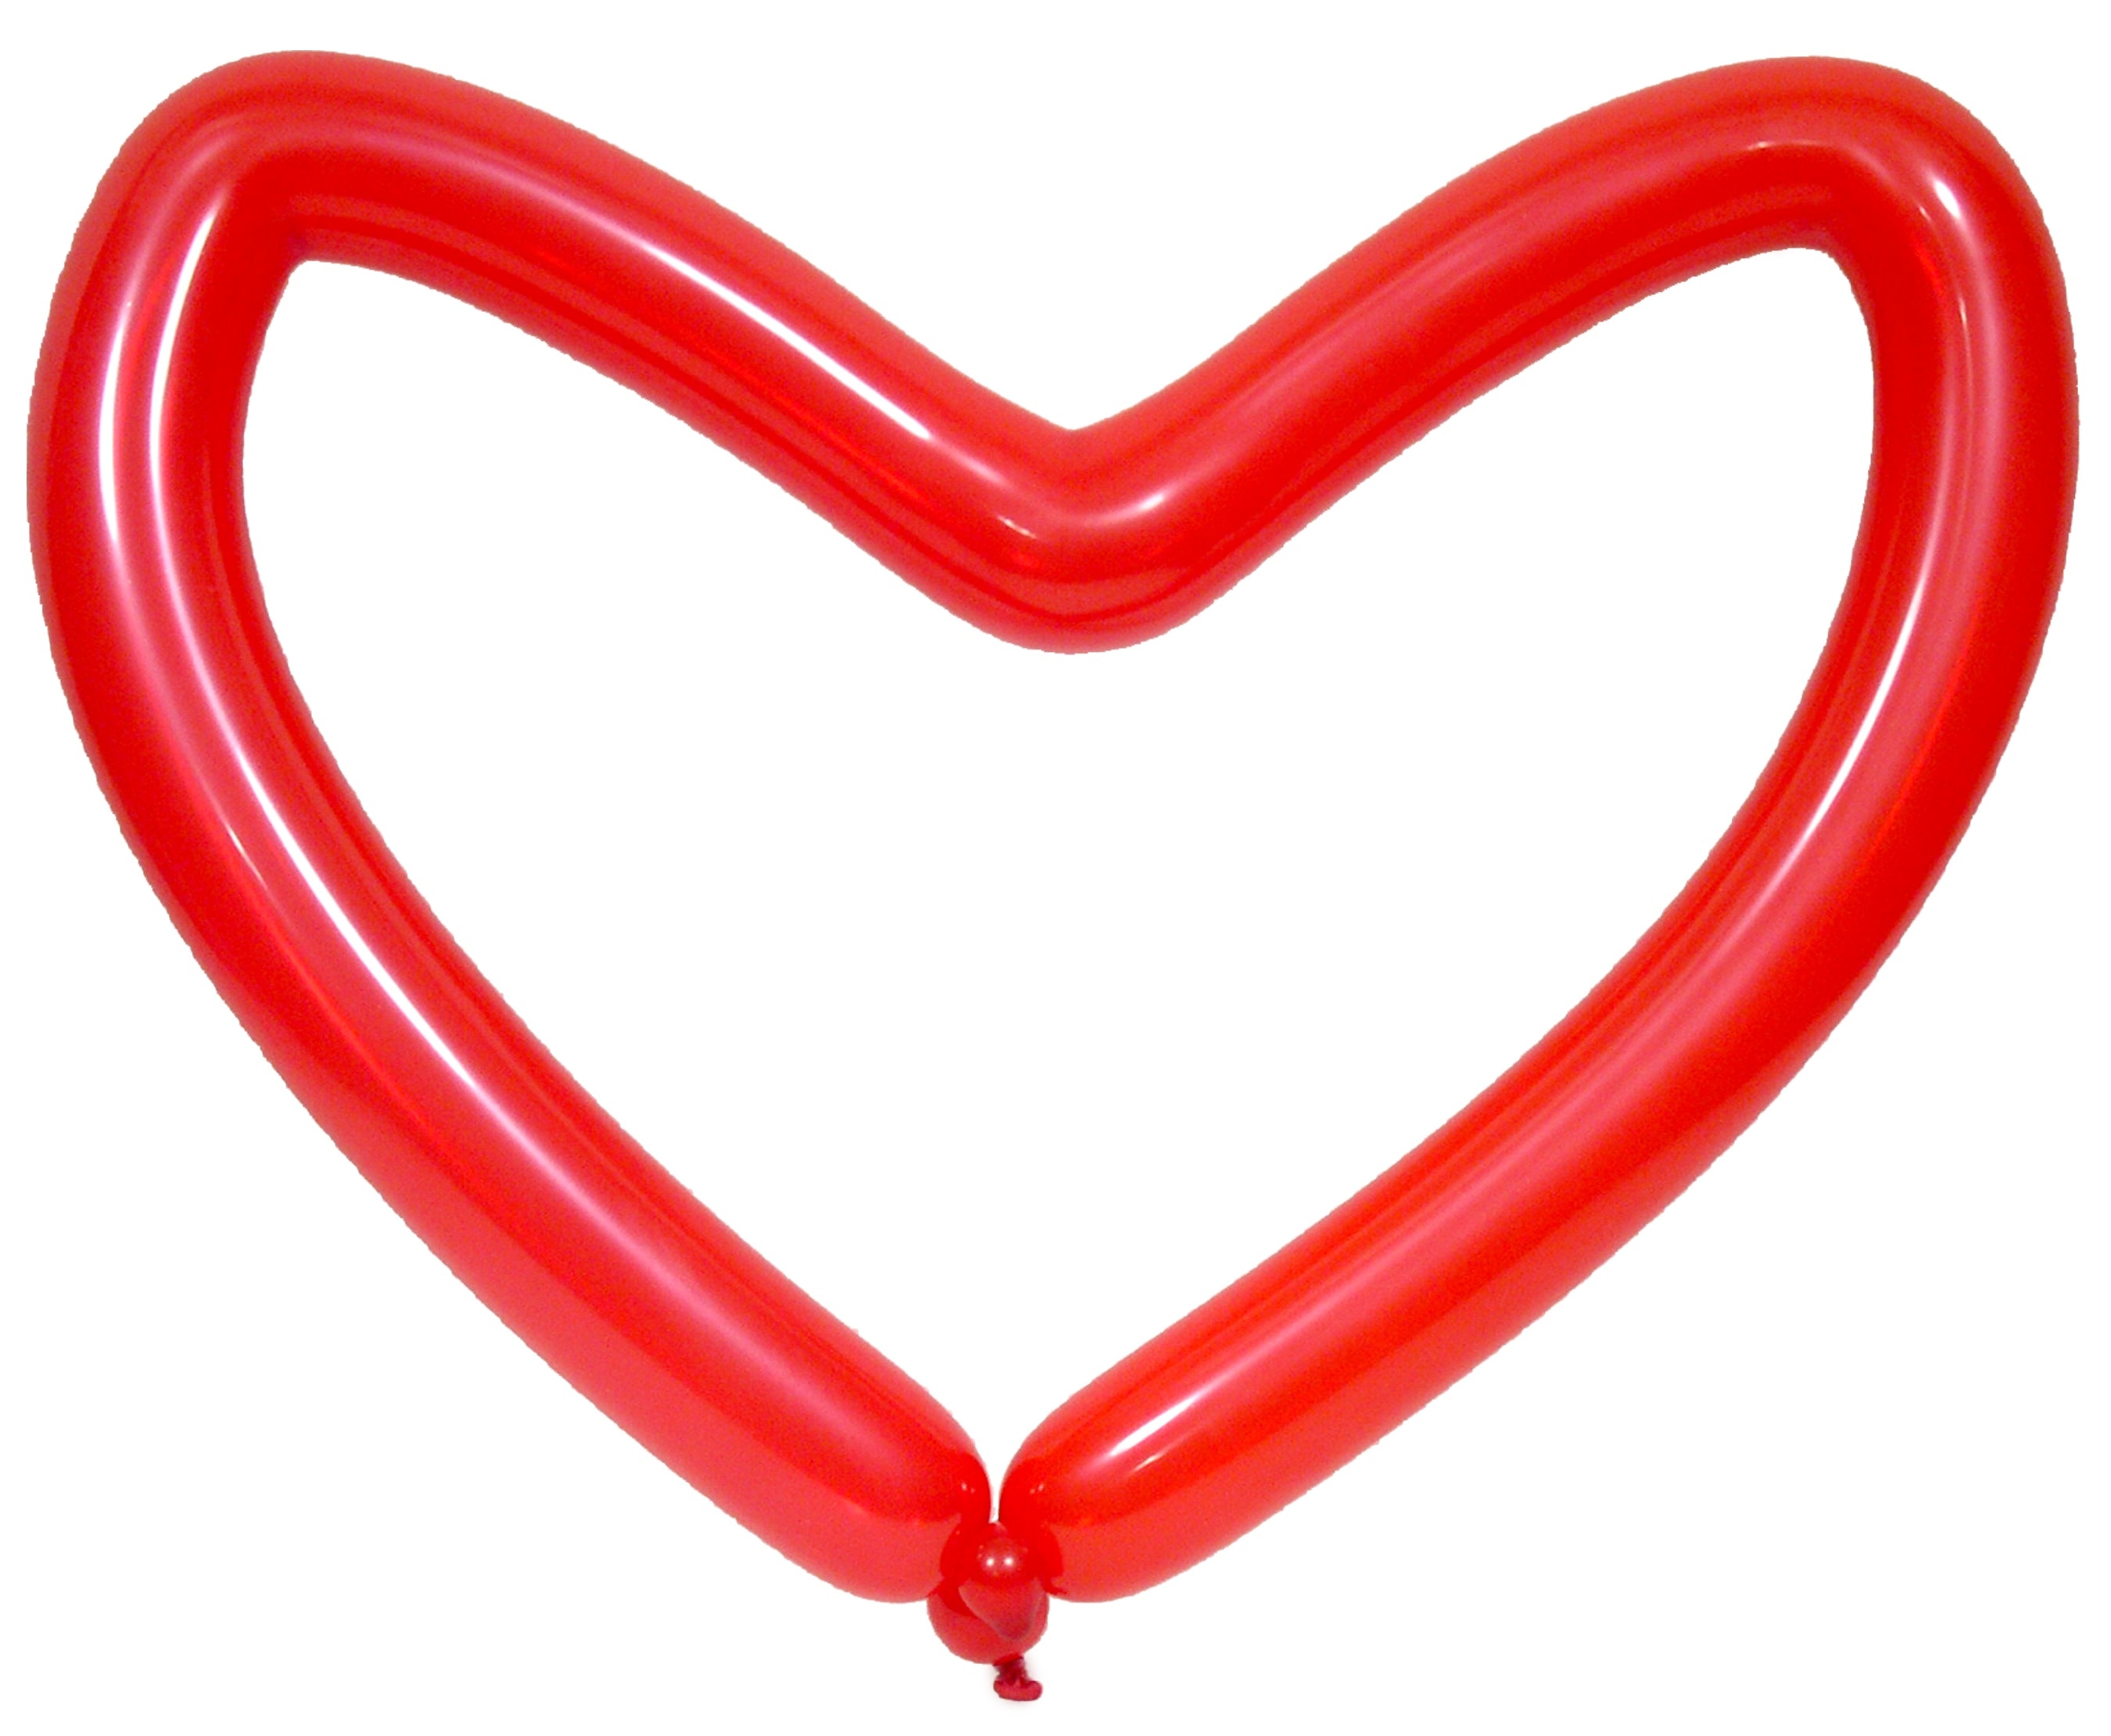 red heart shape balloon